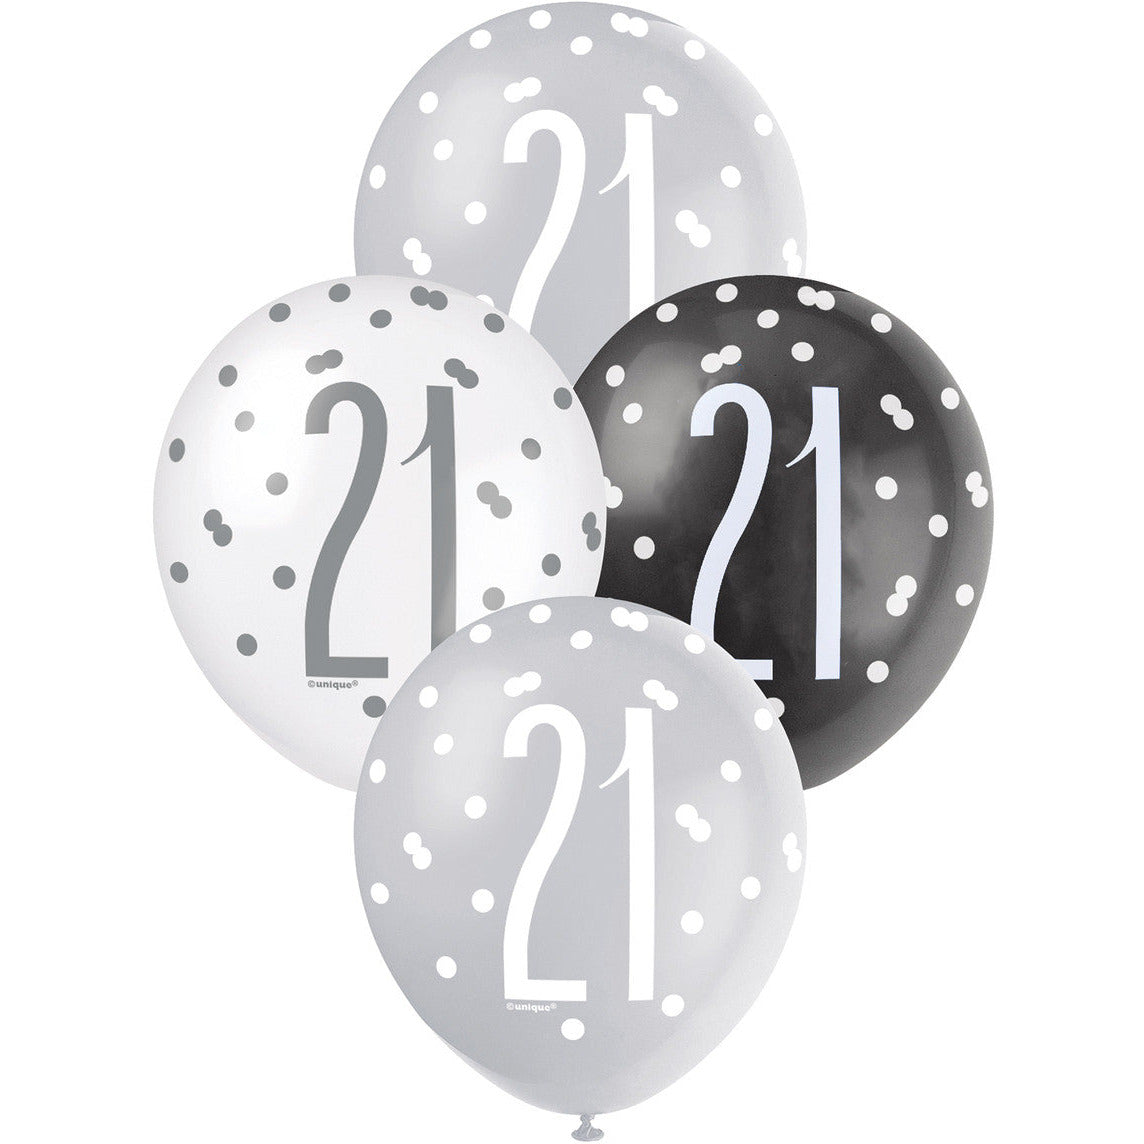 Black, Silver & White 21st Birthday Latex Balloons - Dollars and Sense